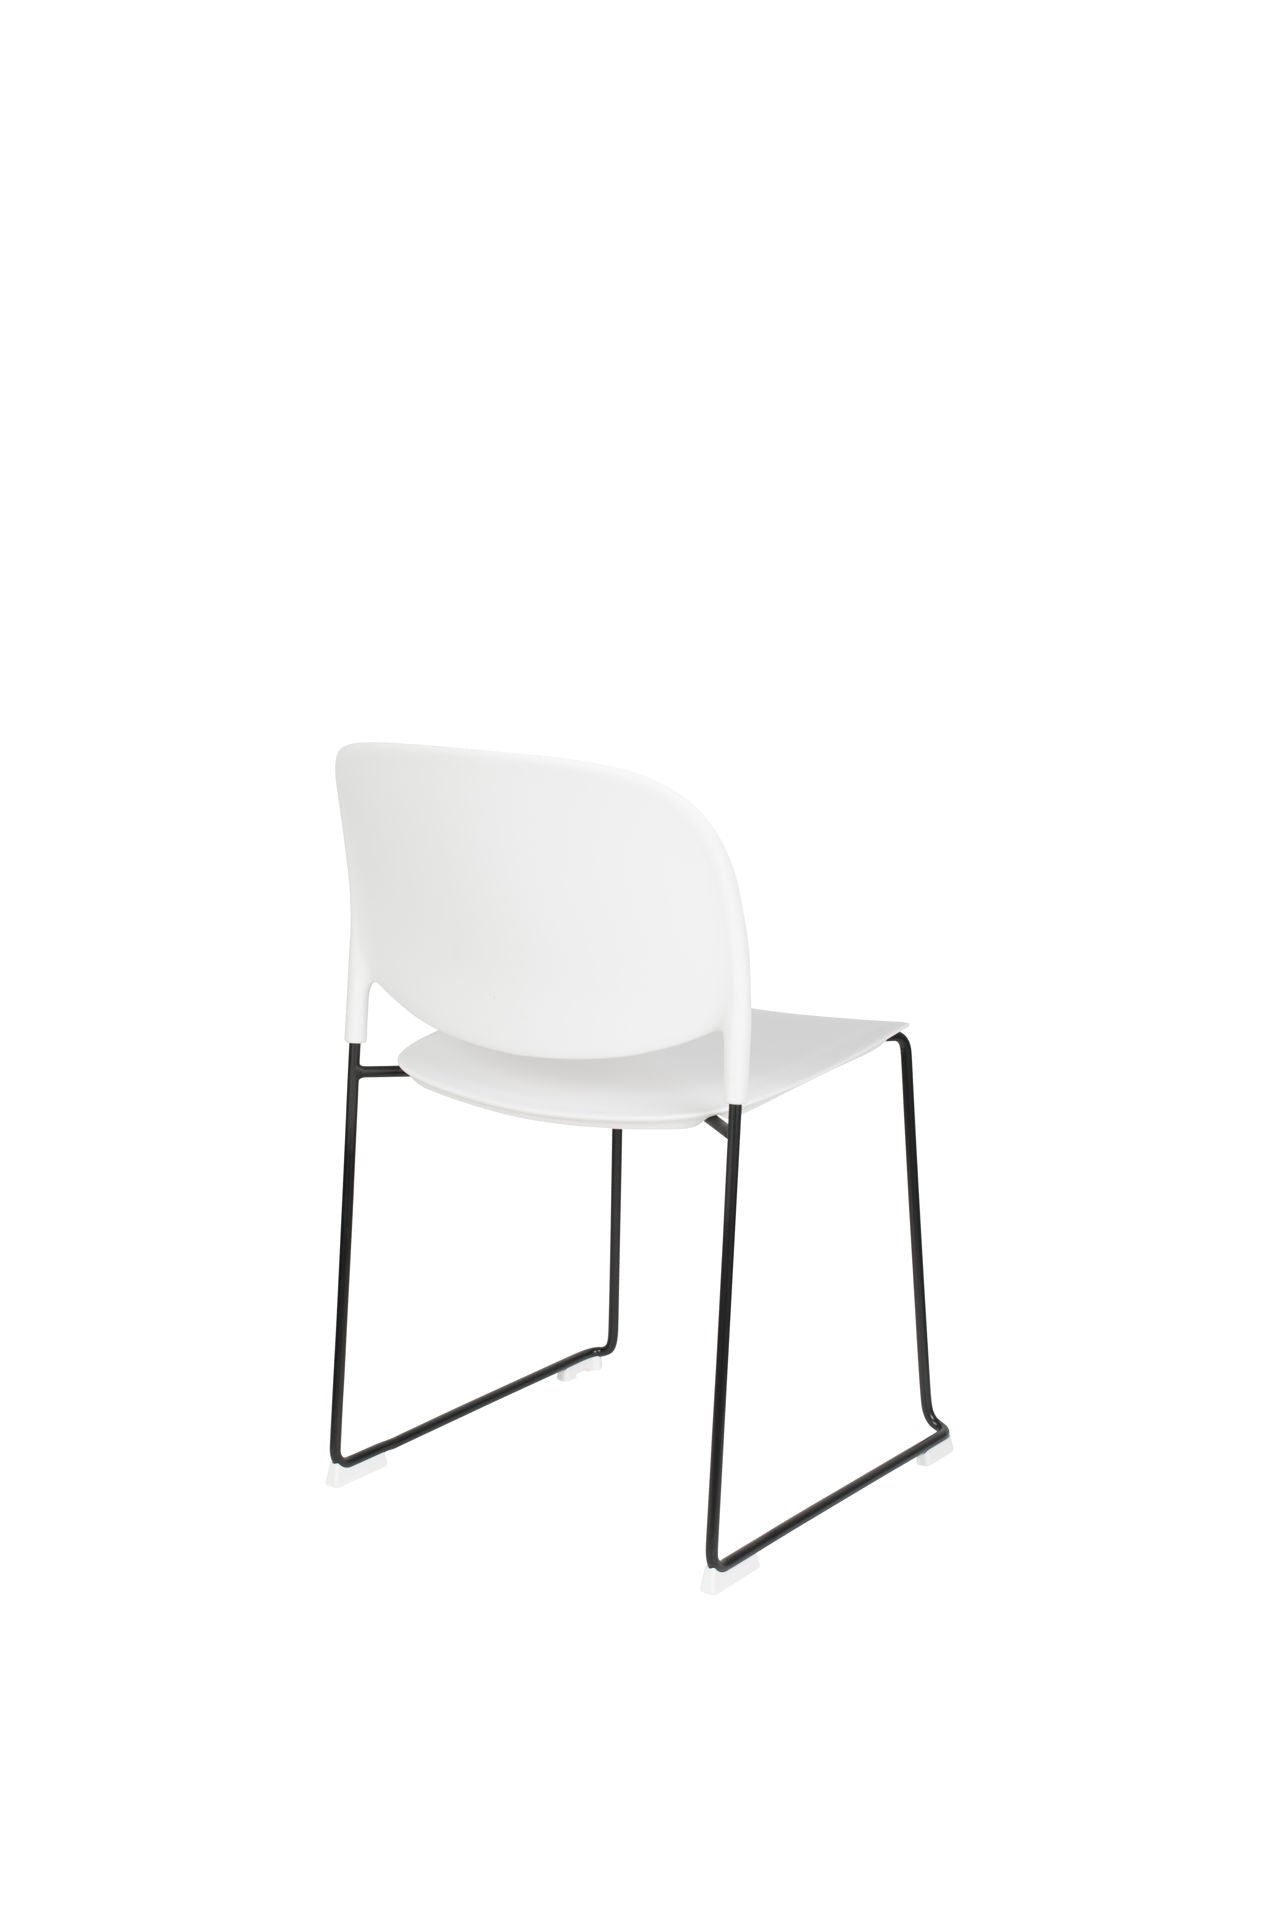 Nancy's San Sebastin Chair - Retro - White, Black - Polypropylene, Steel, Plastic - 52.5 cm x 48.5 cm x 80 cm